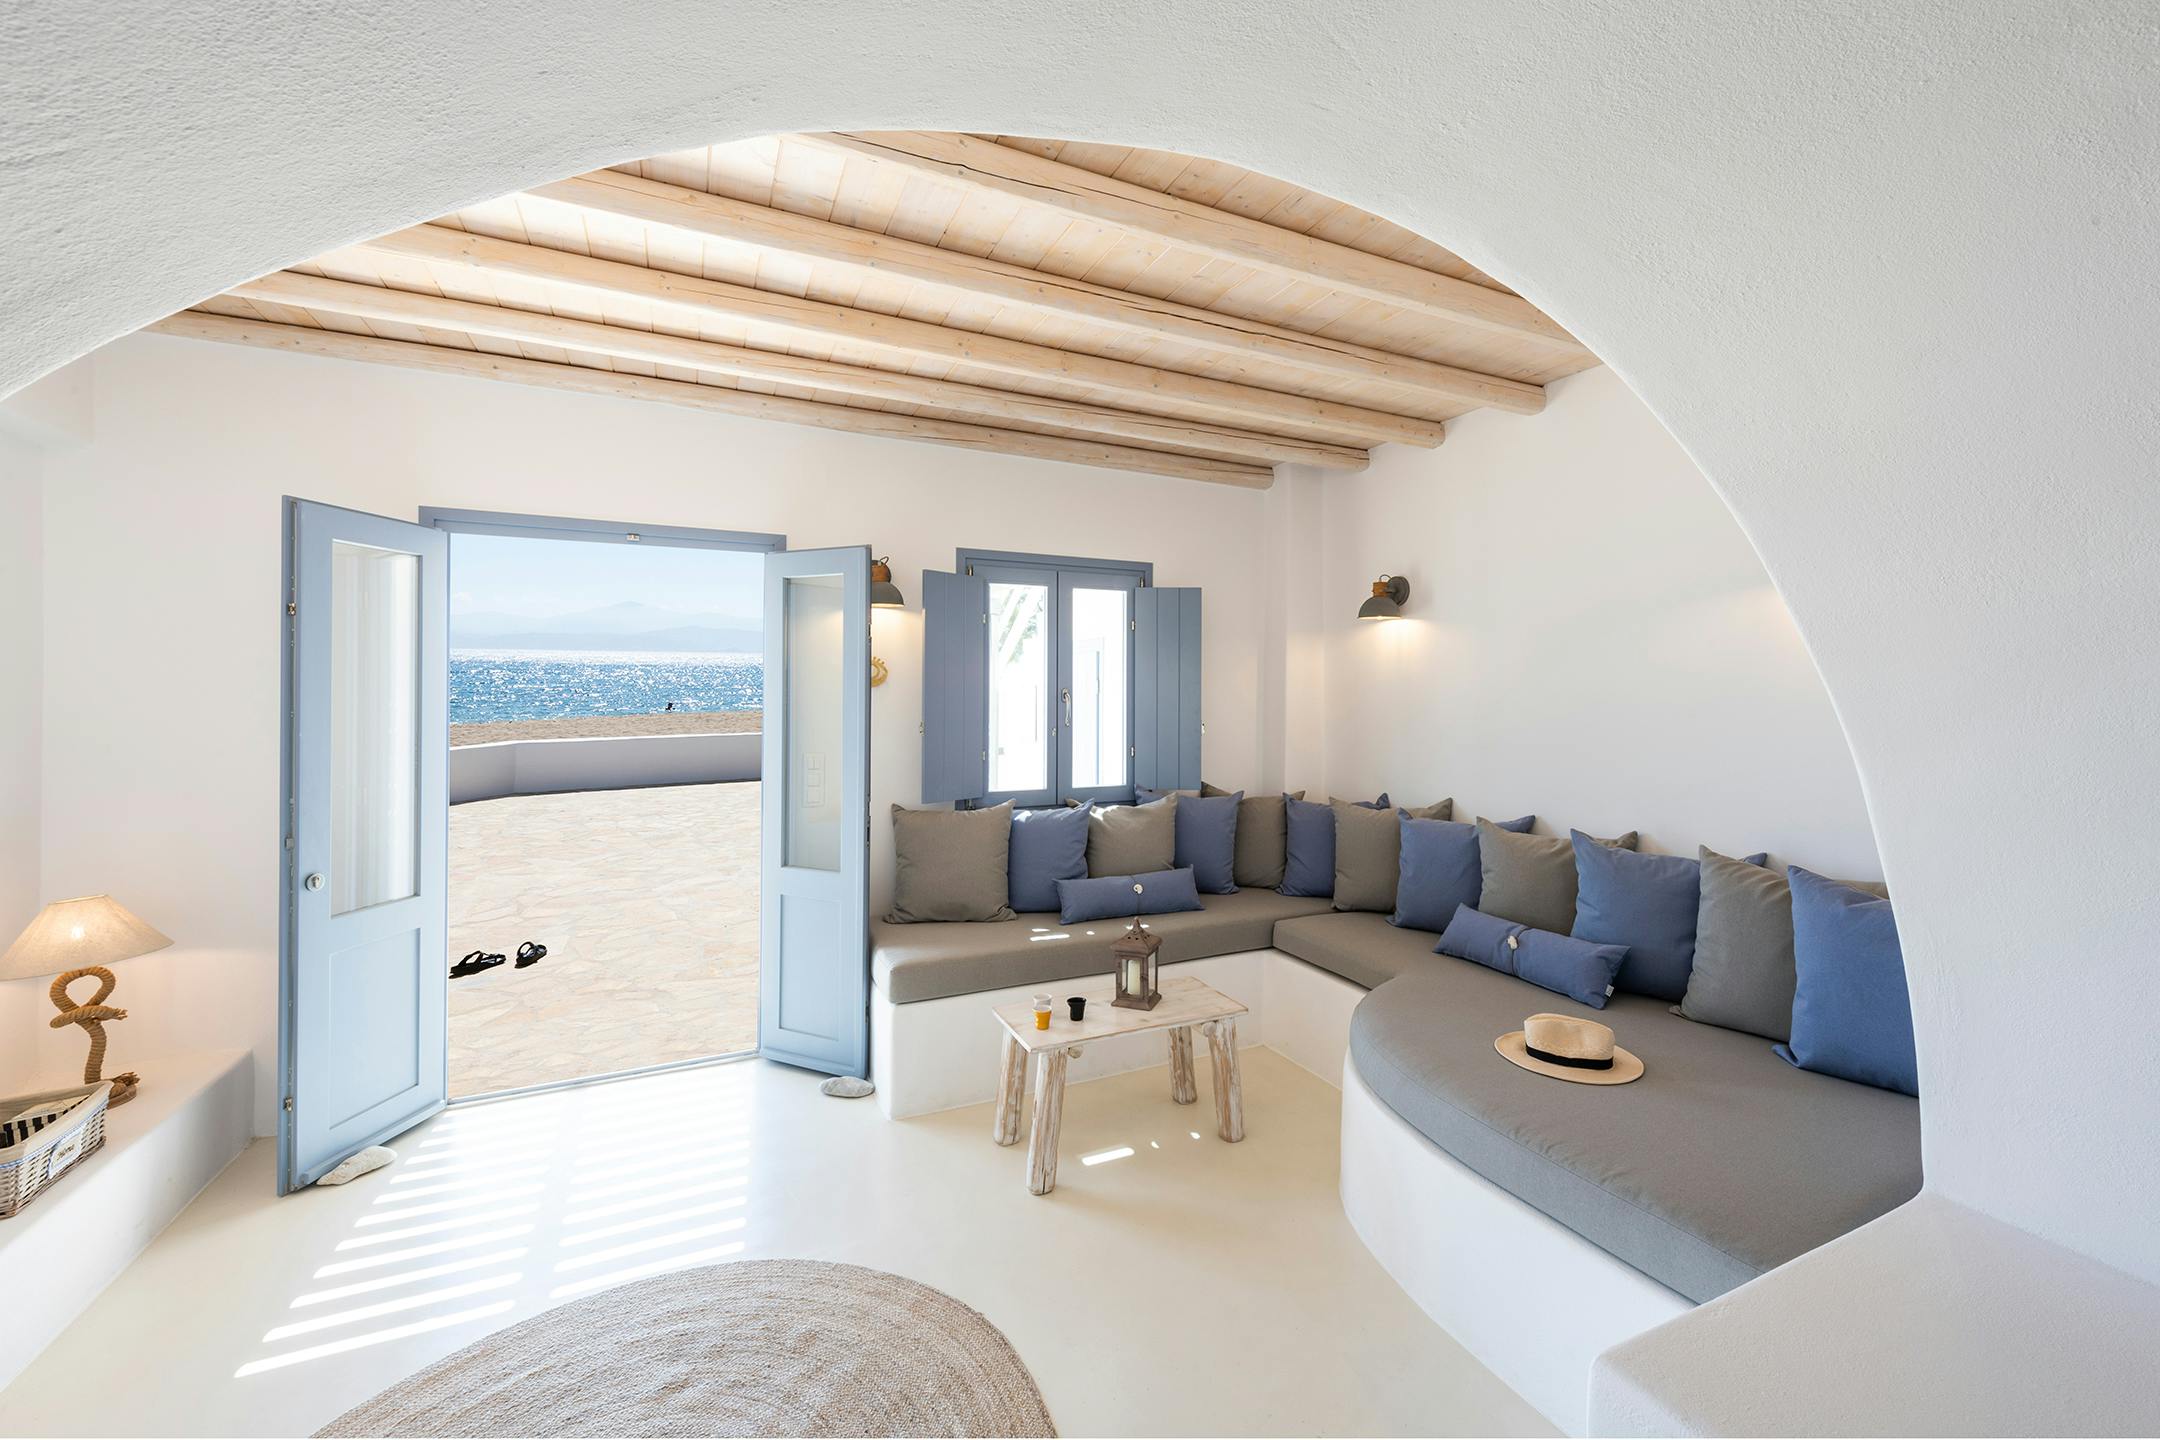 On the Beach, Summer House in Paros Renovated & Redesigned by Kavallis Giorgos, Kalligrammon No2